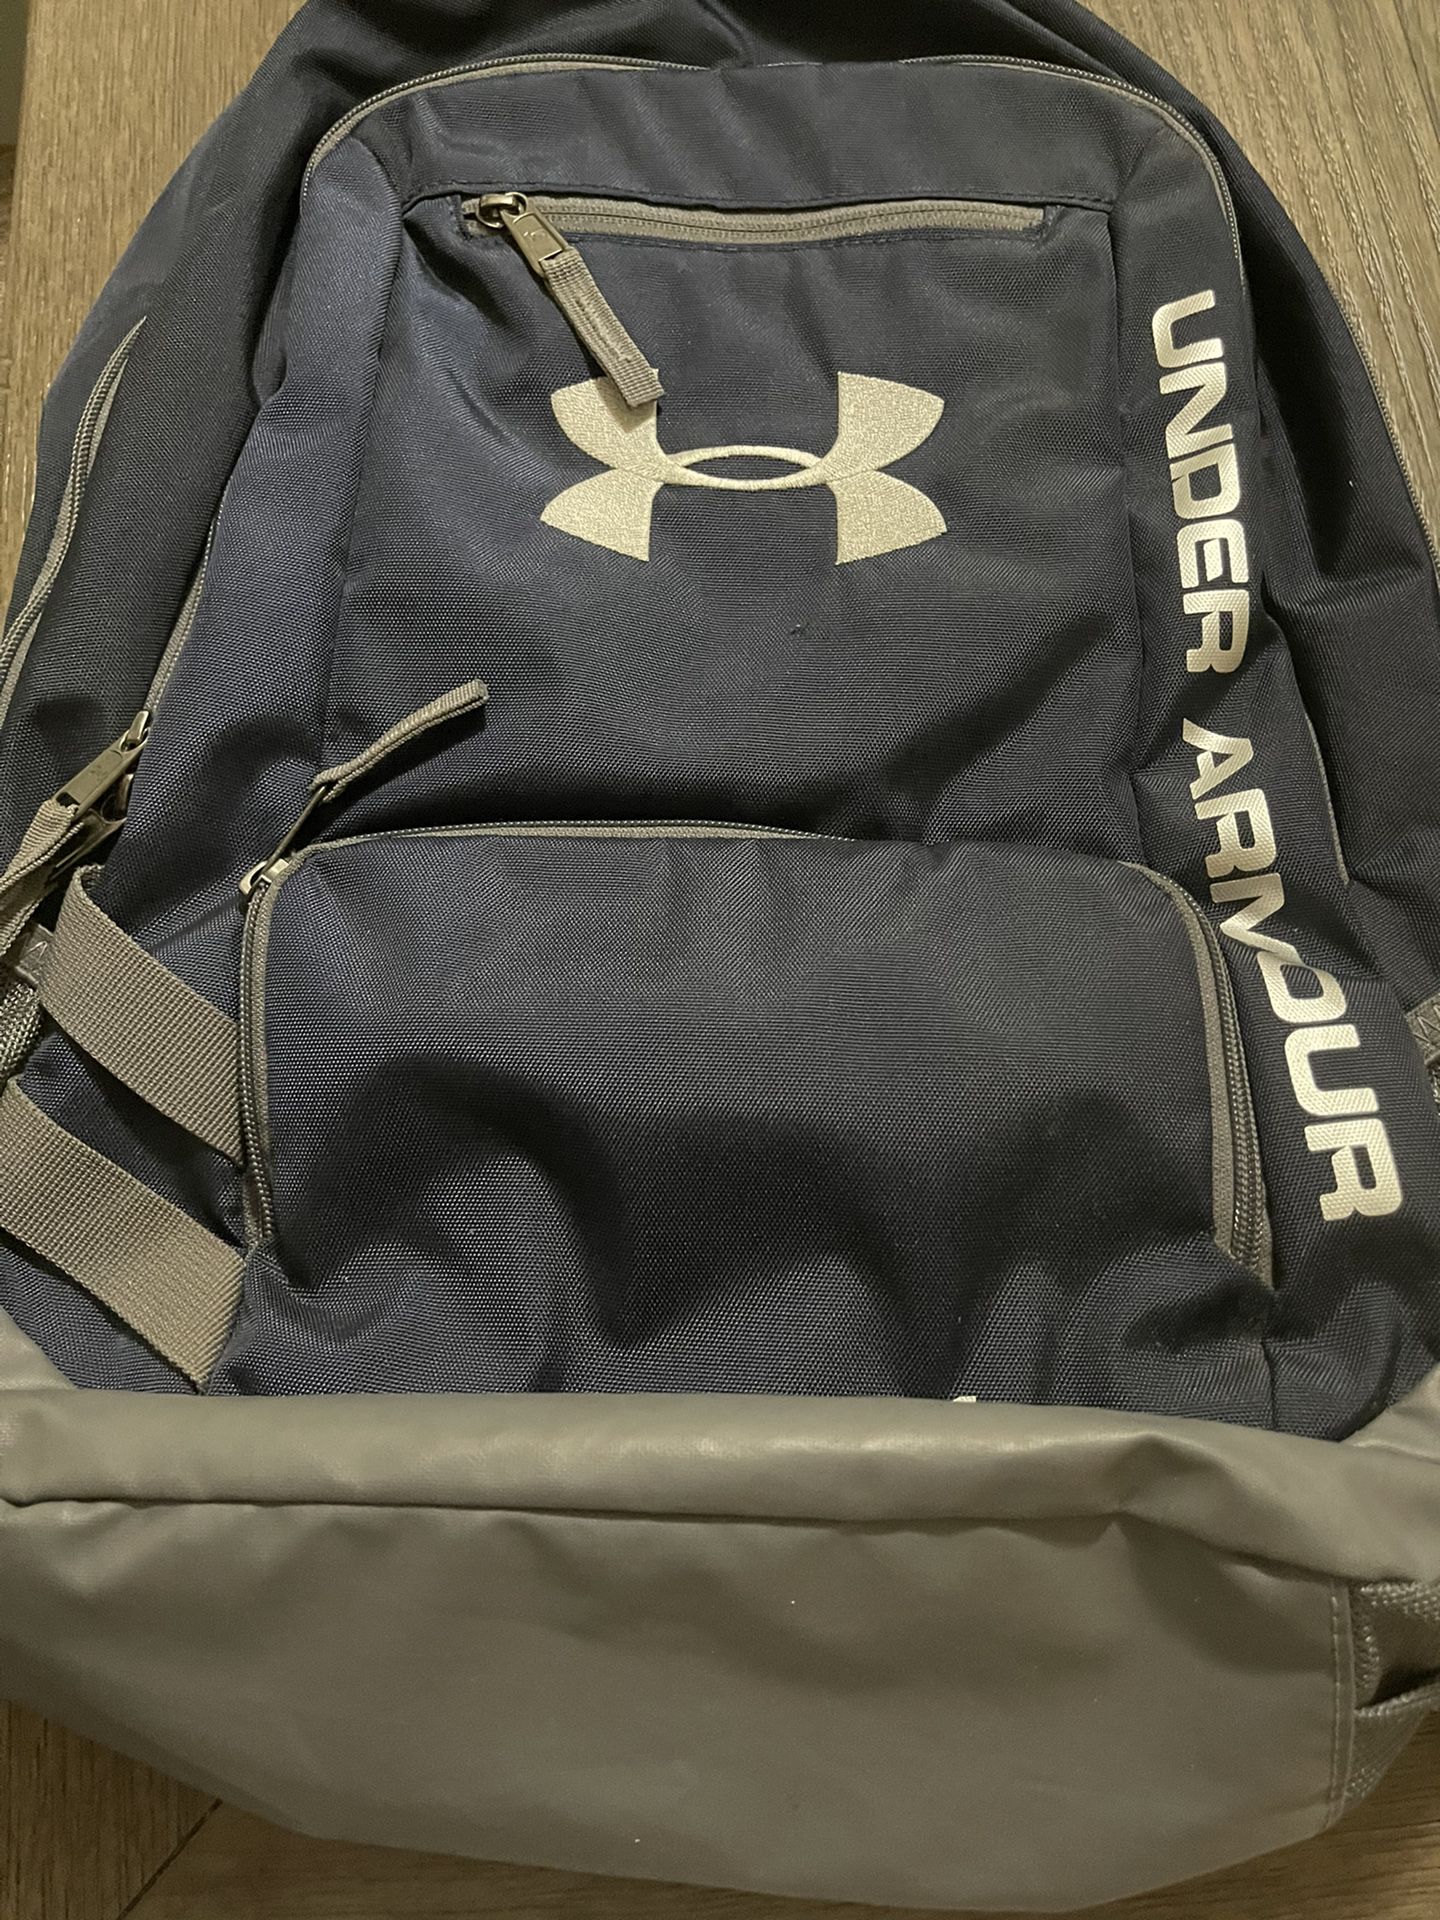 Under armor backpack